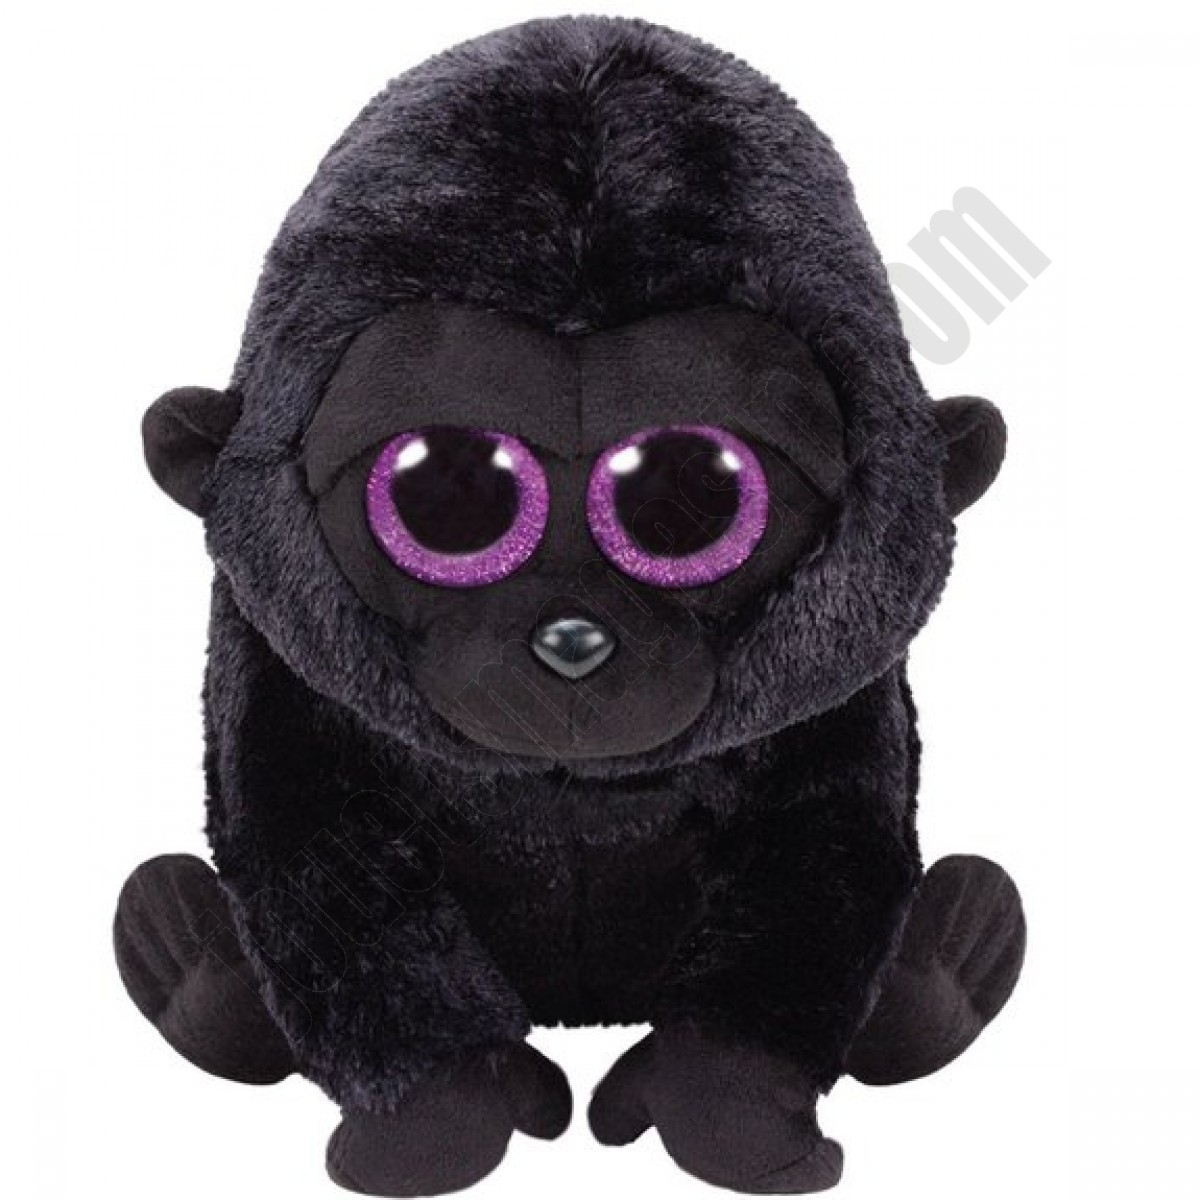 Beanie Boo's - Peluche George Le Gorille 23 cm ◆◆◆ Nouveau - Beanie Boo's - Peluche George Le Gorille 23 cm ◆◆◆ Nouveau